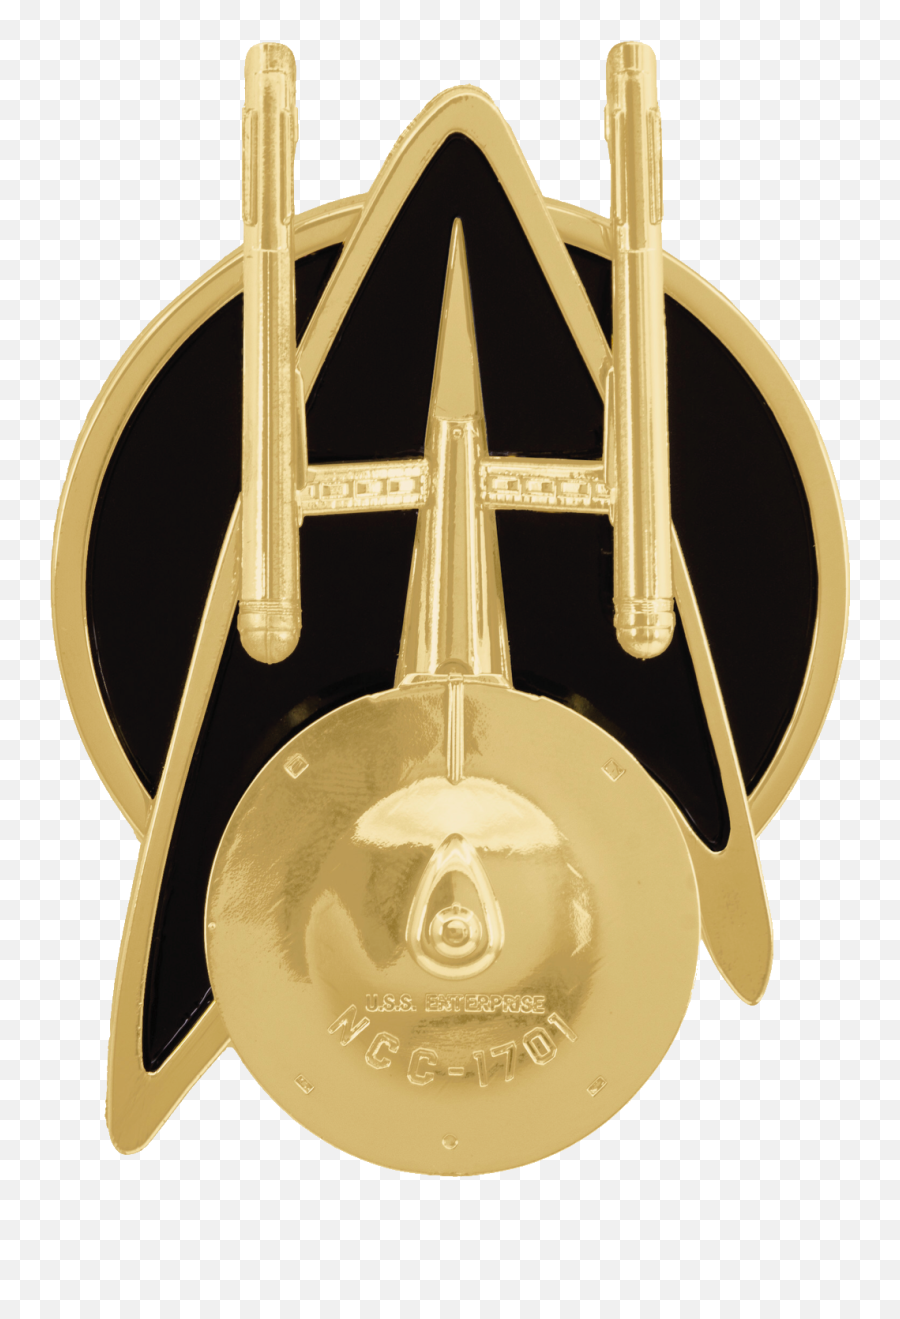 Ornaments By Year Hallmark Star Trek - Hallmark Star Trek Ornaments 2021 Png,Star Trek Enterprise Icon